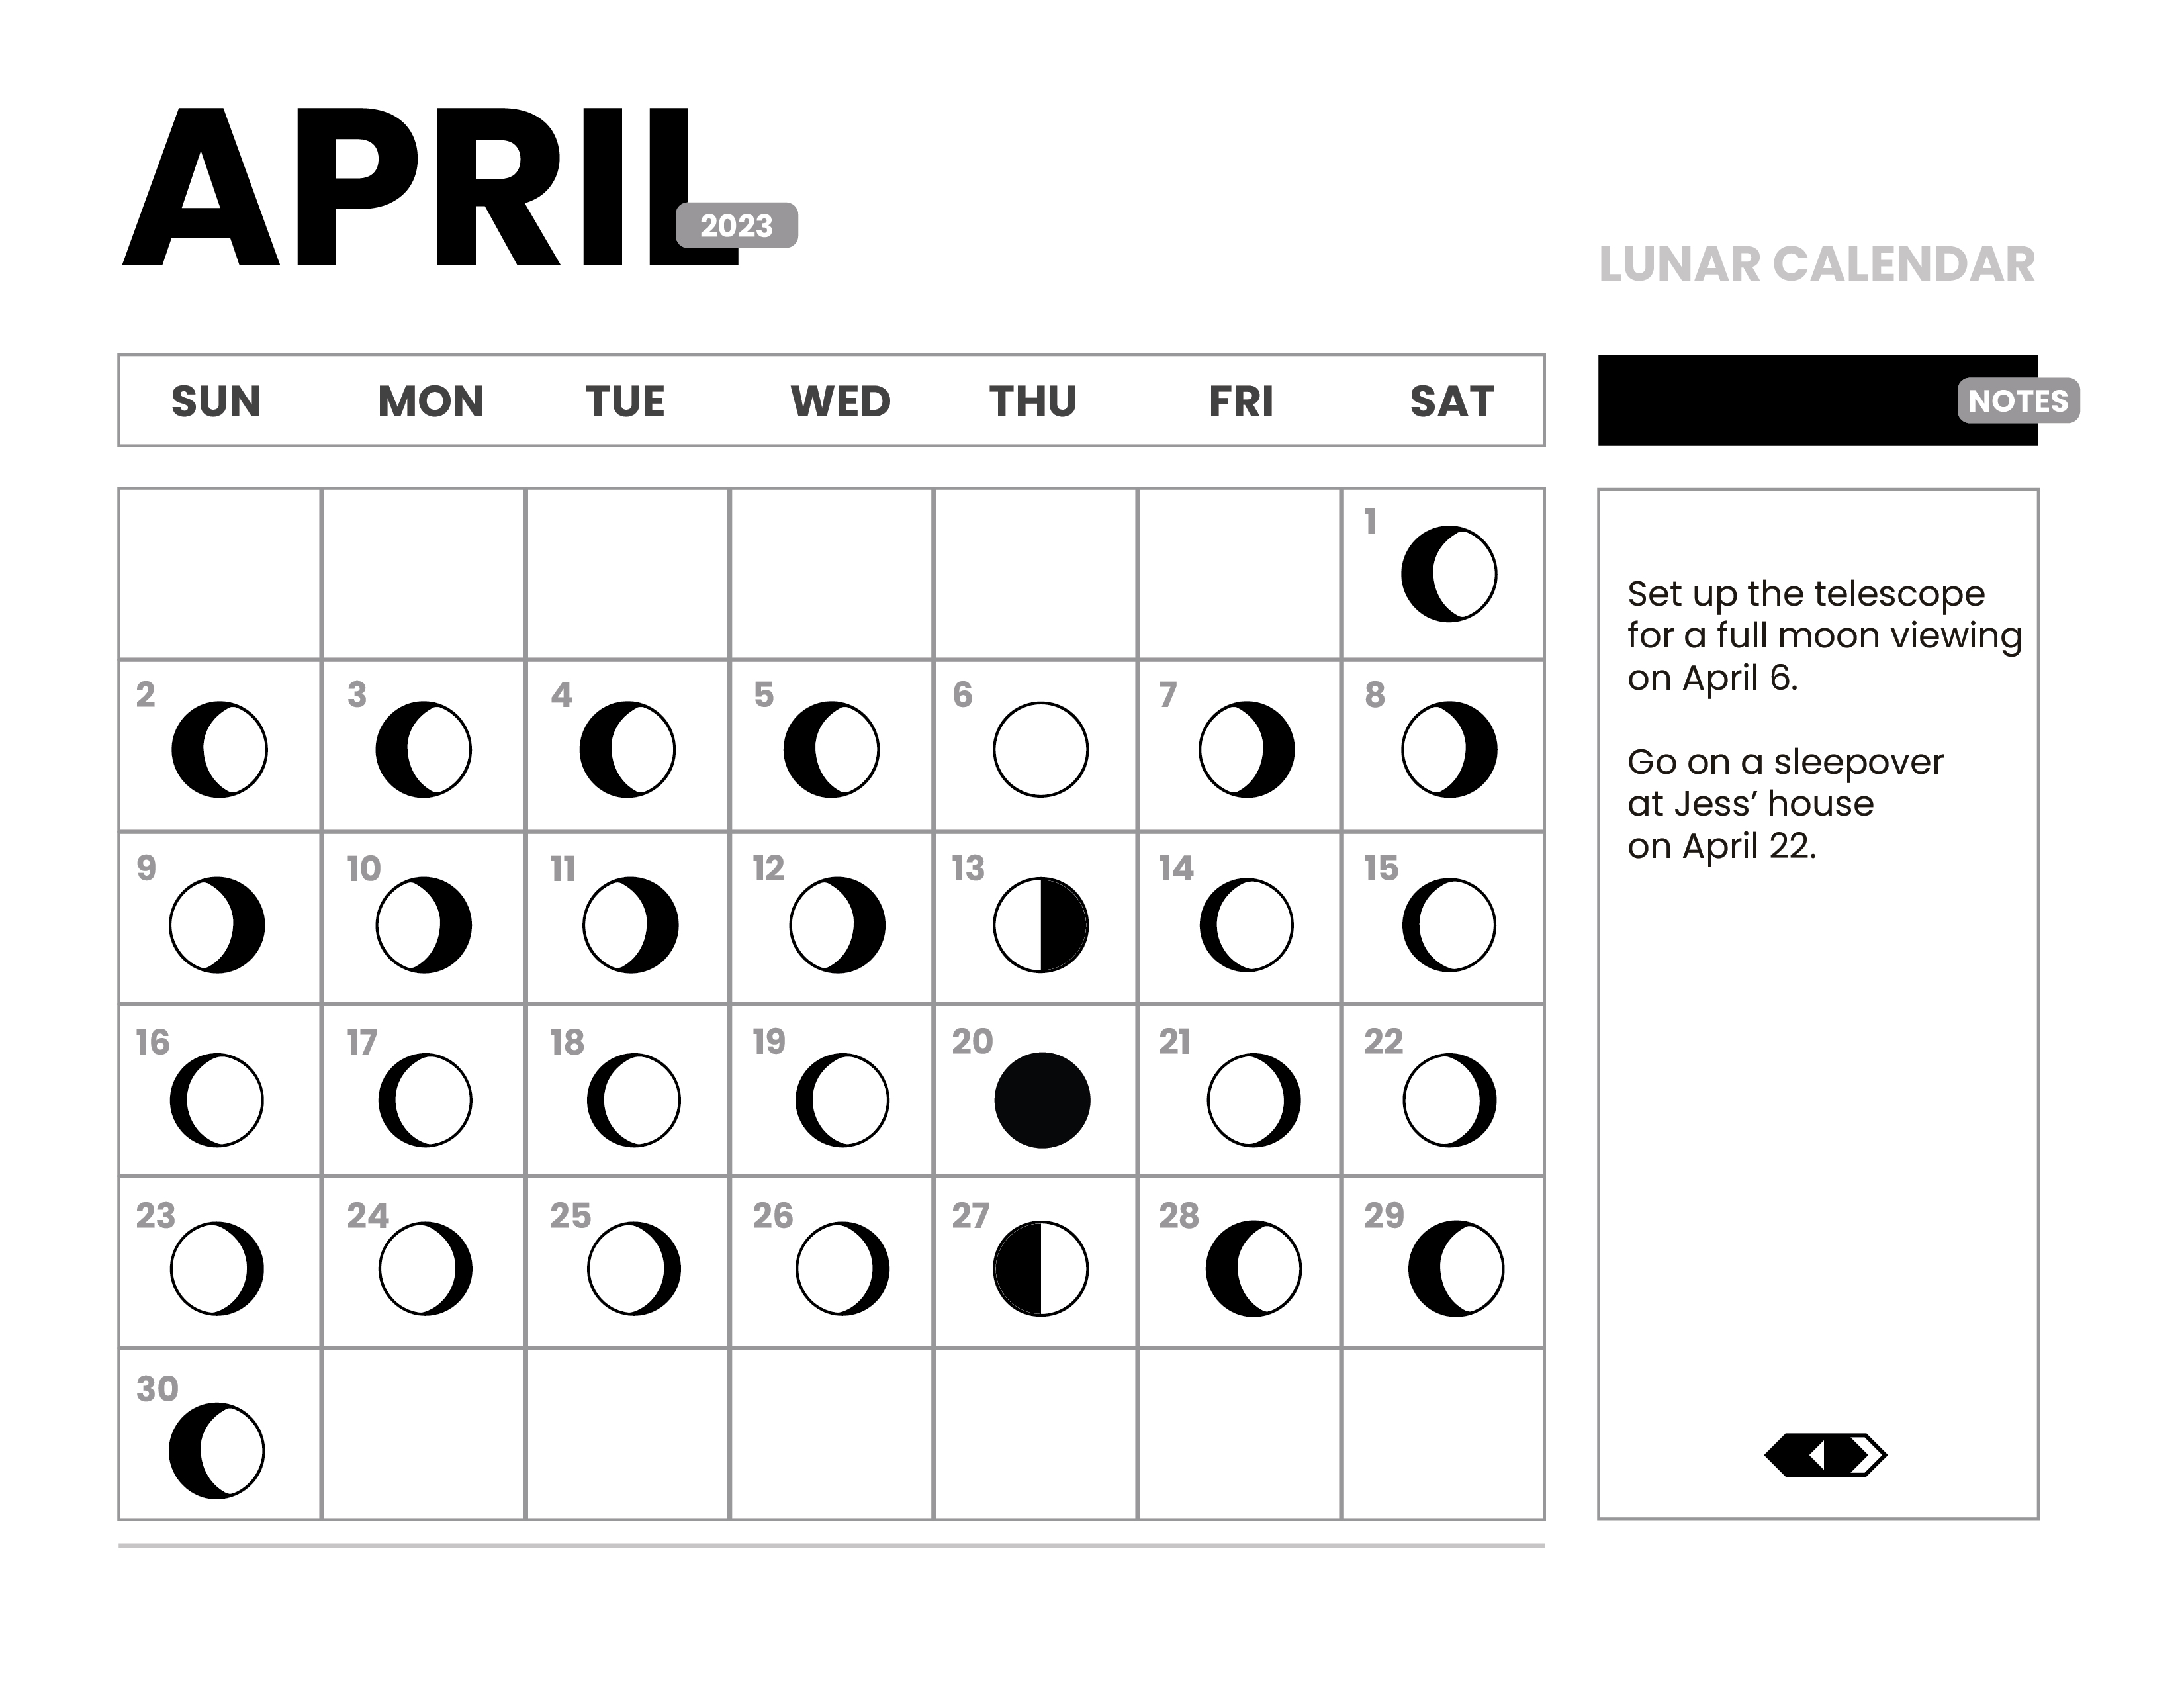 Lunar Calendar February 2023 Download in Word, Illustrator, PSD